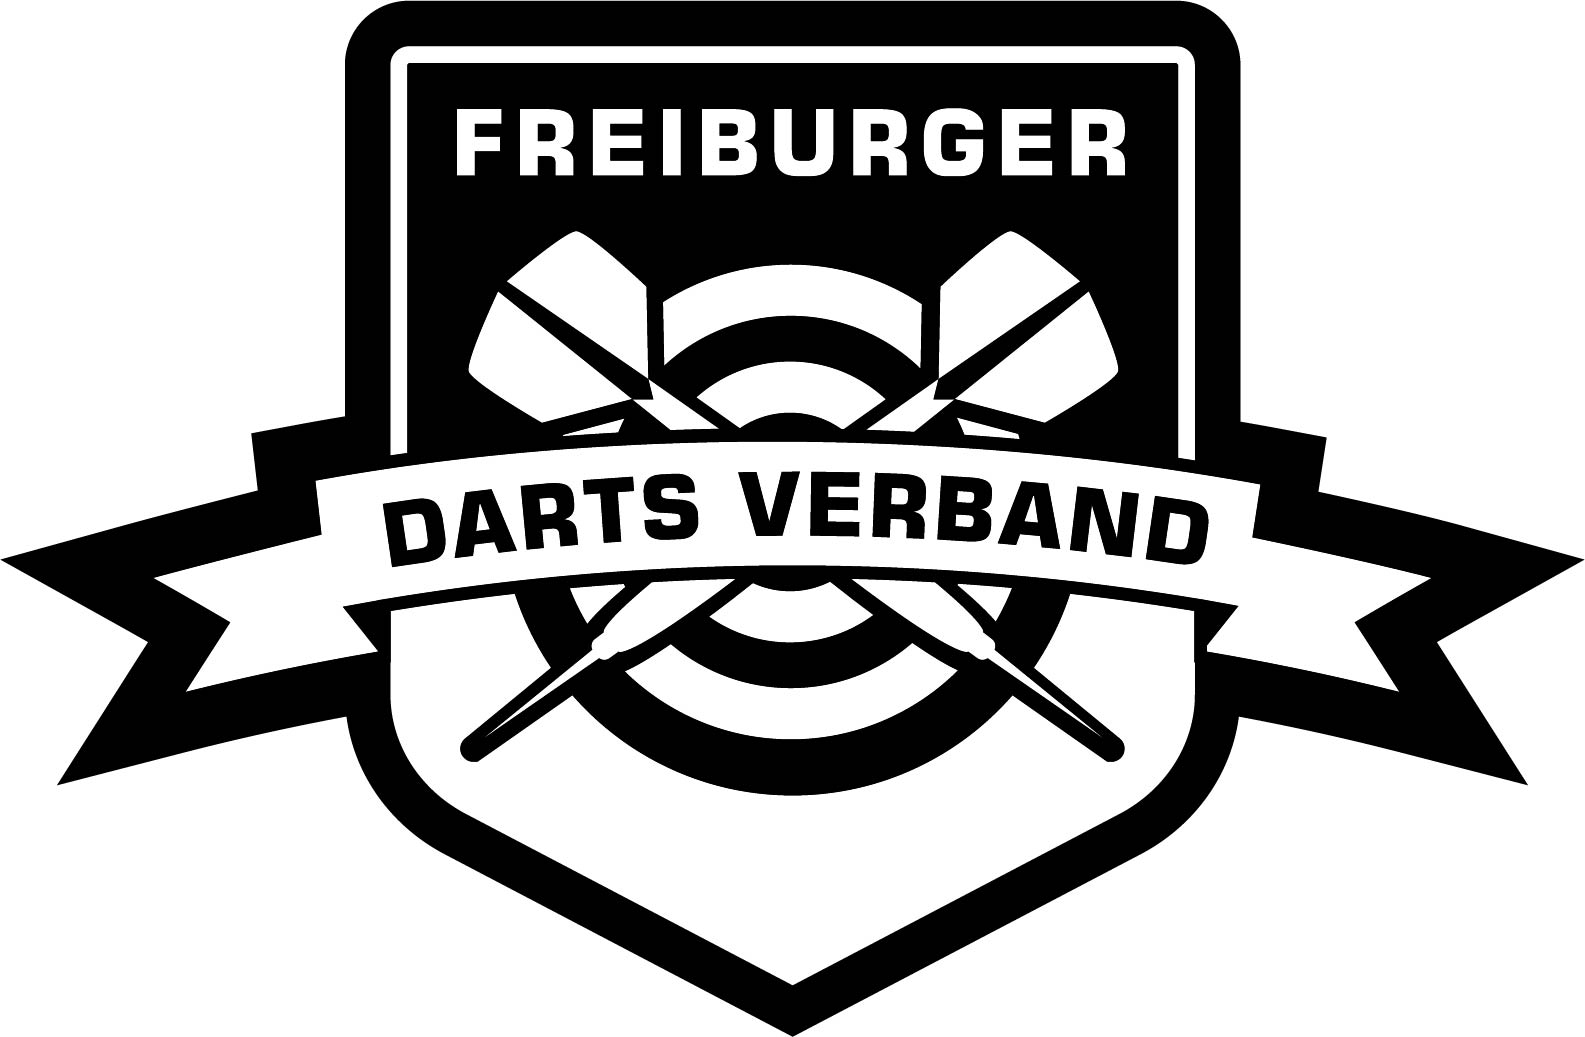 Freiburger Darts Verband Logo